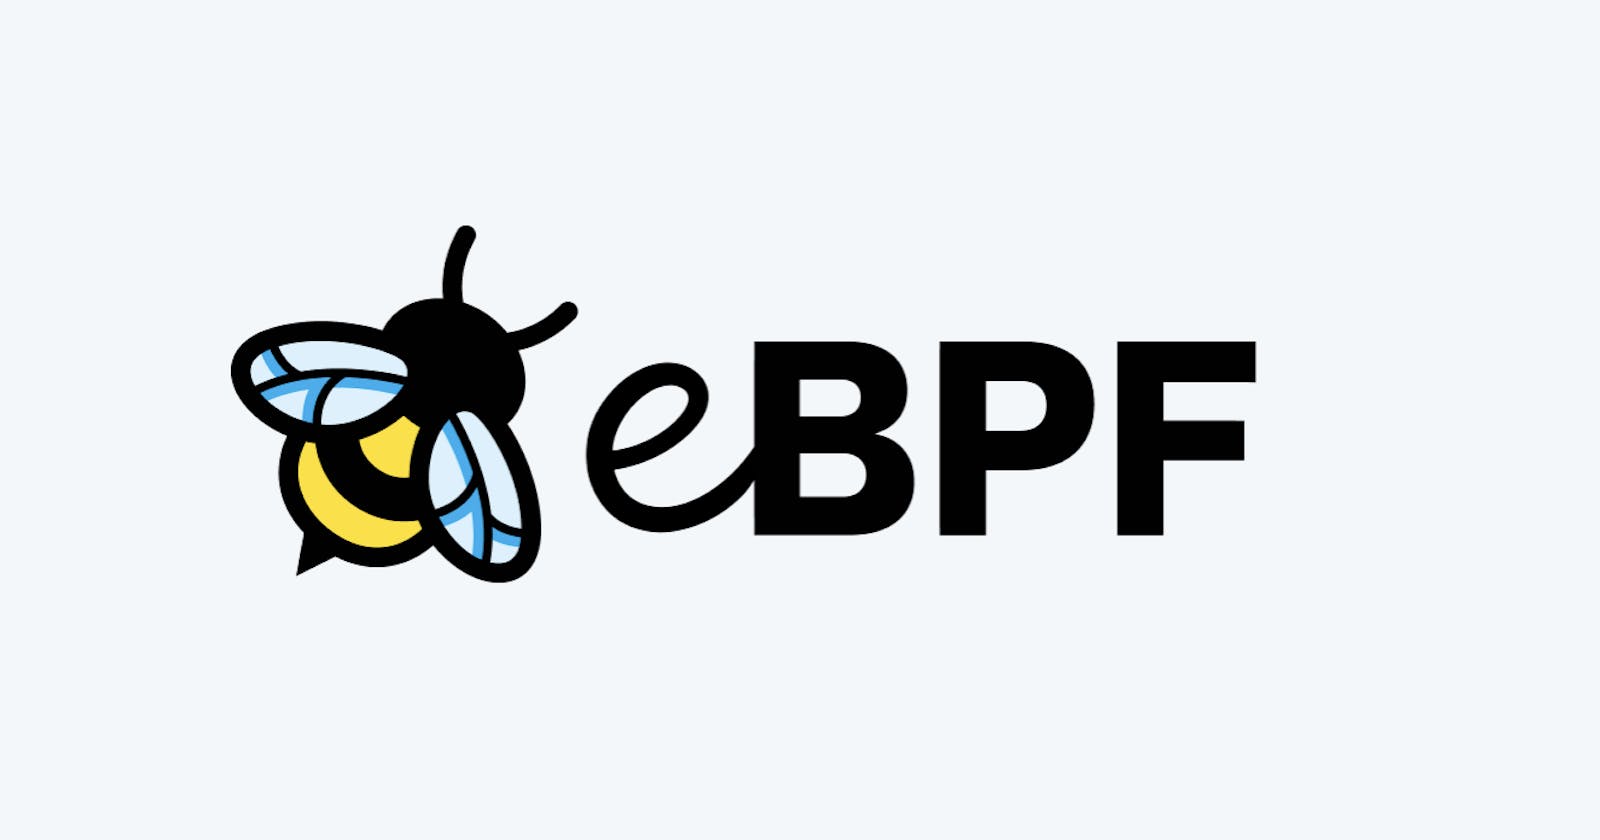 eBPF - extended Berkeley Packet Filter